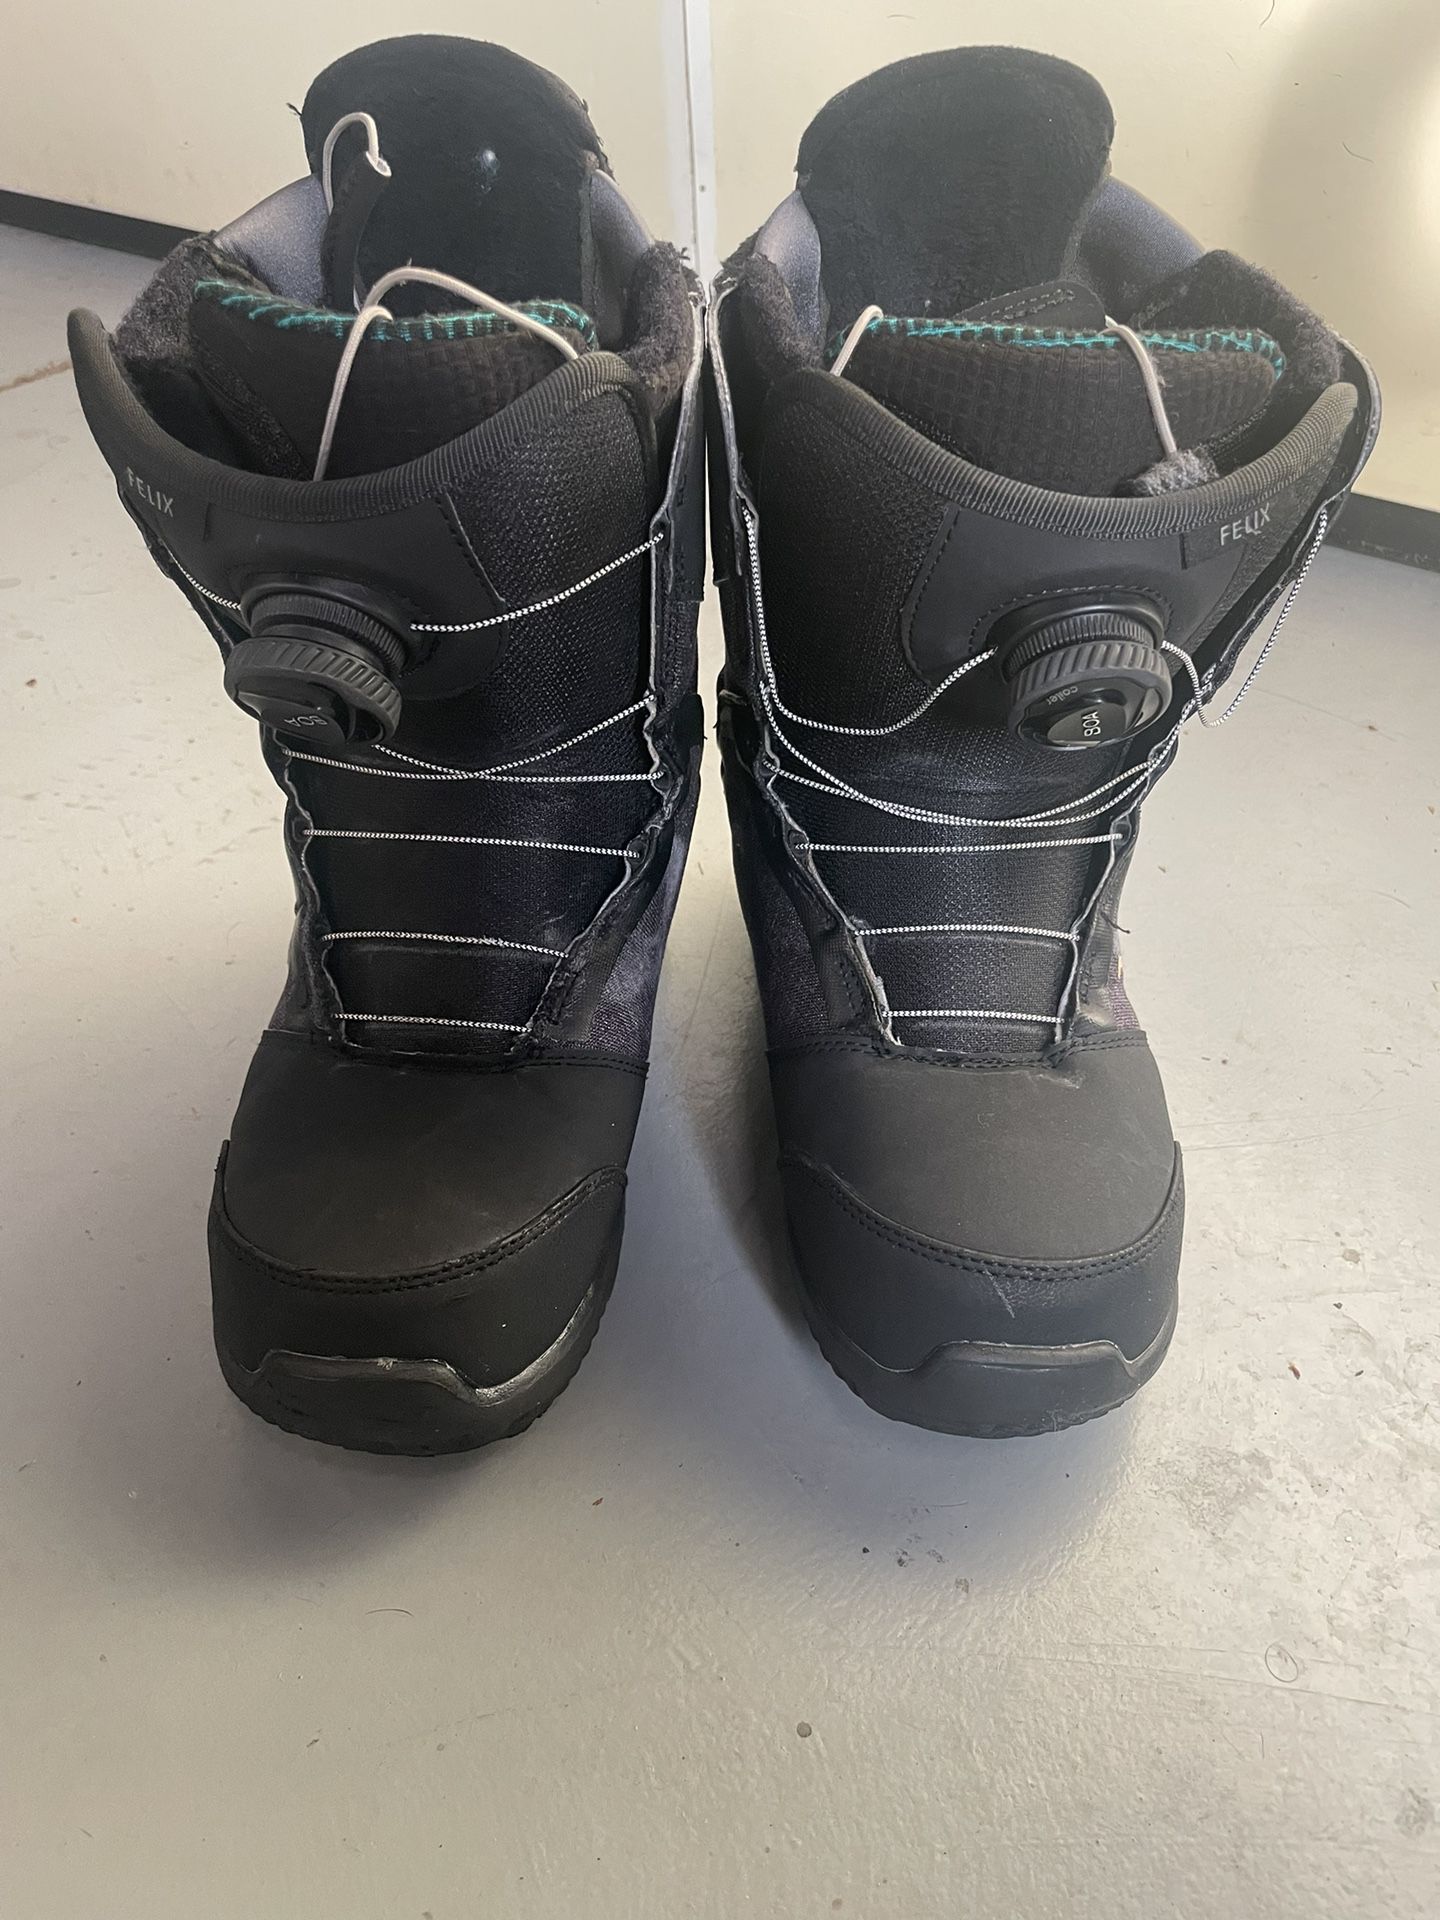 Womens Burton Felix Snowboard Boots